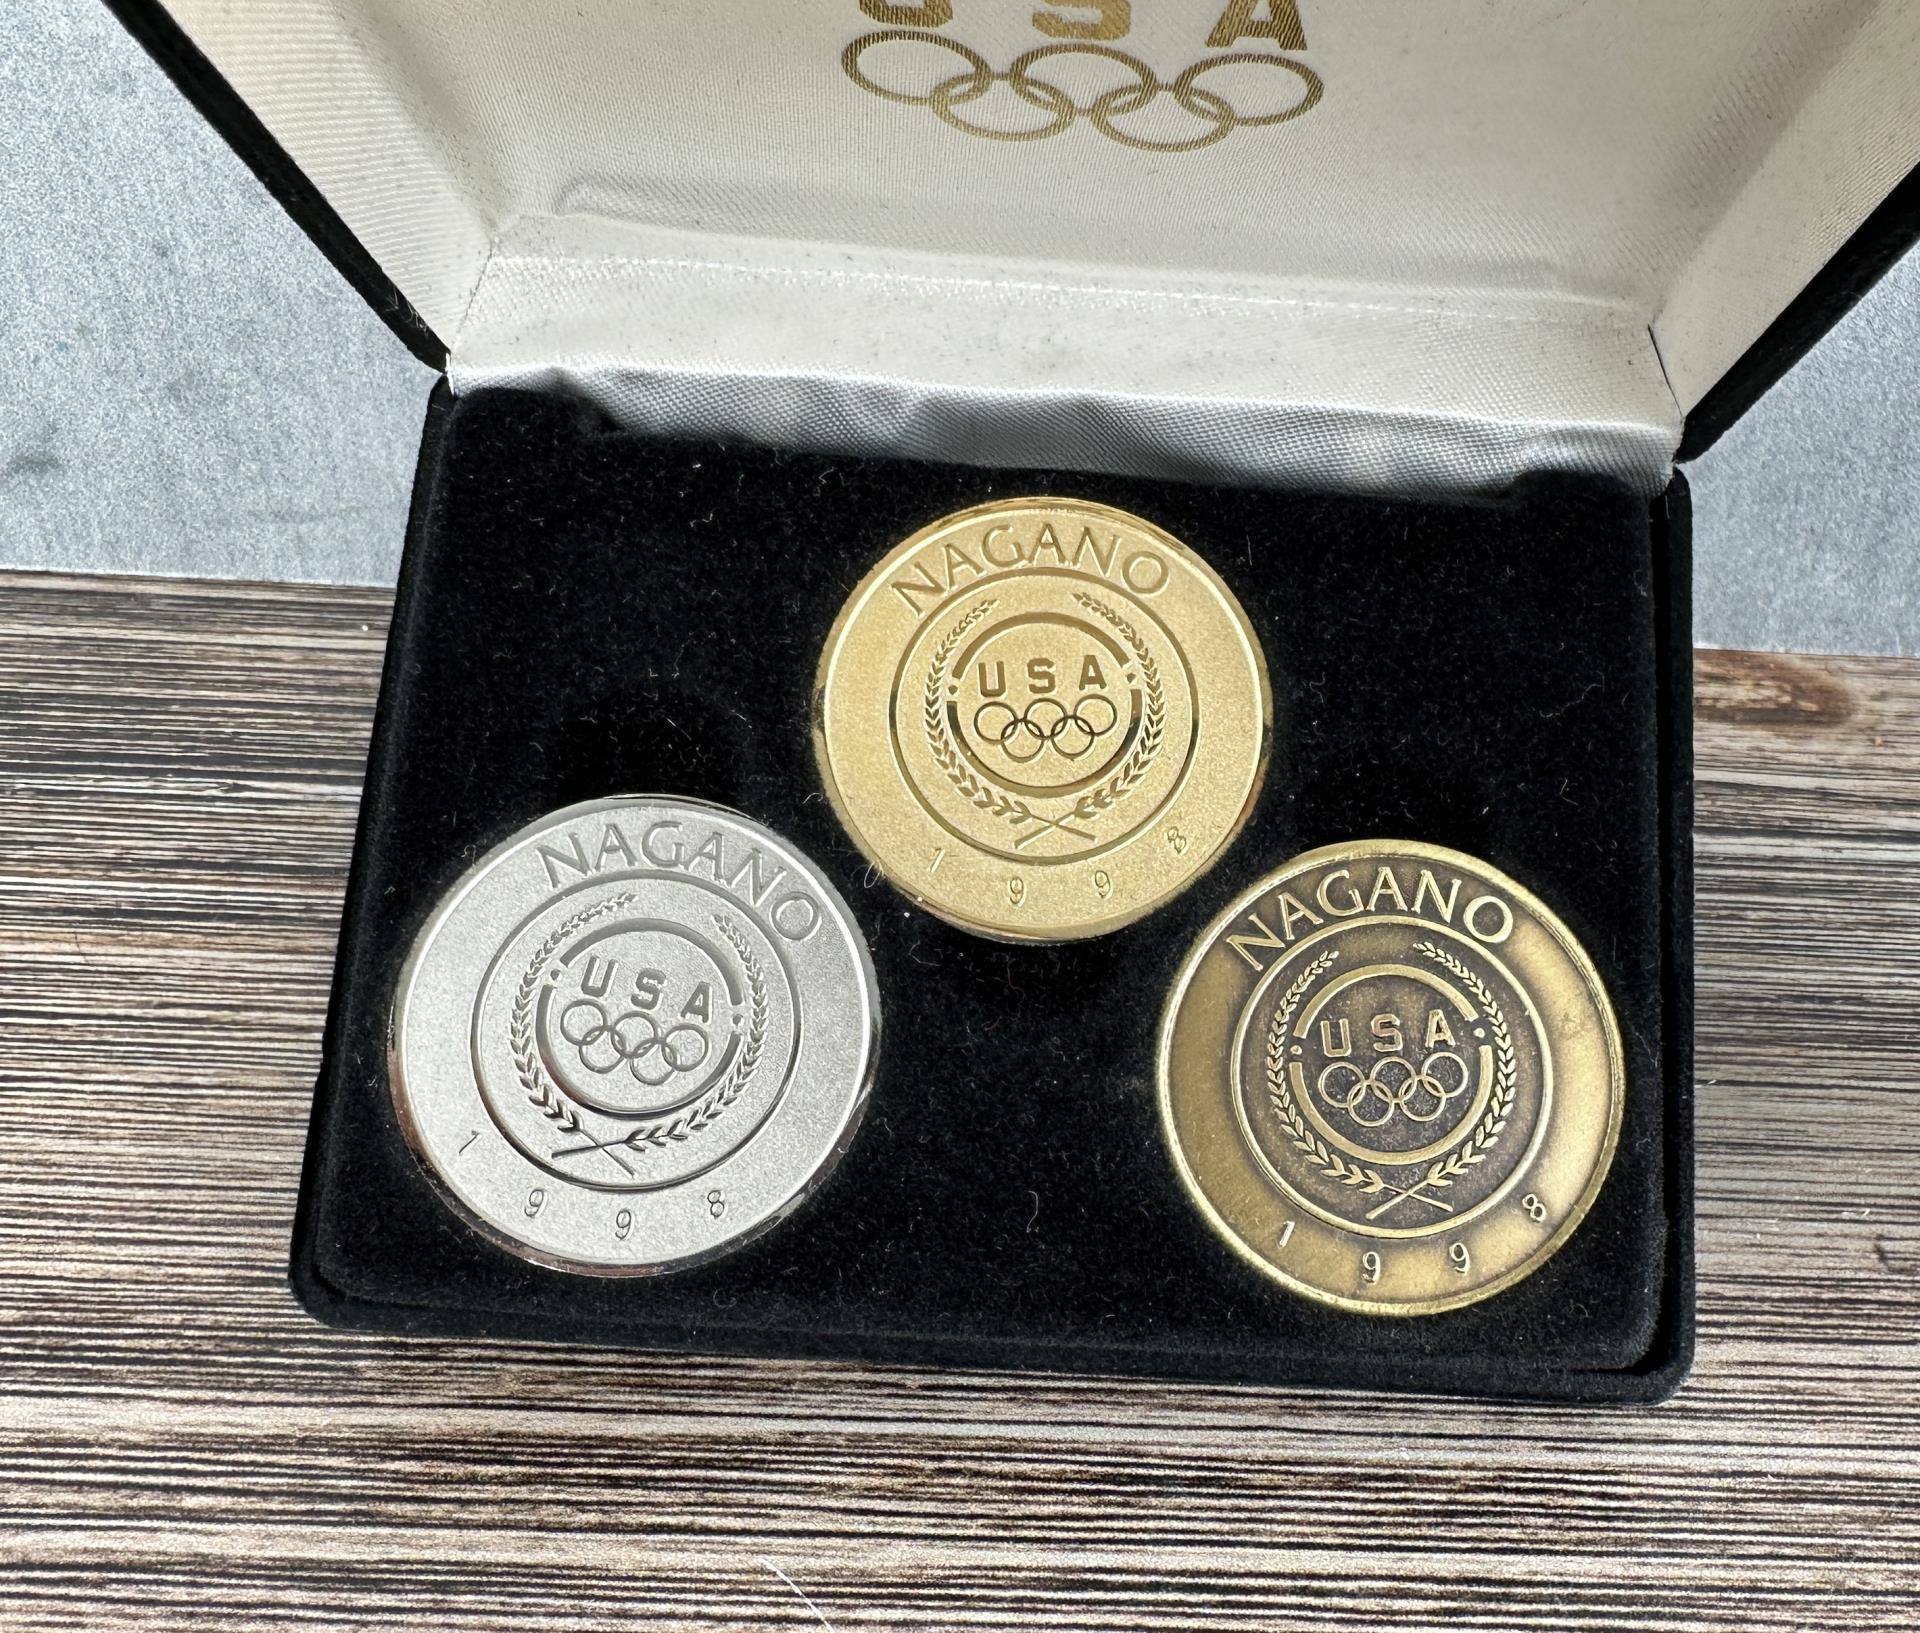 1998 Nagano Winter Olympics Medal Set